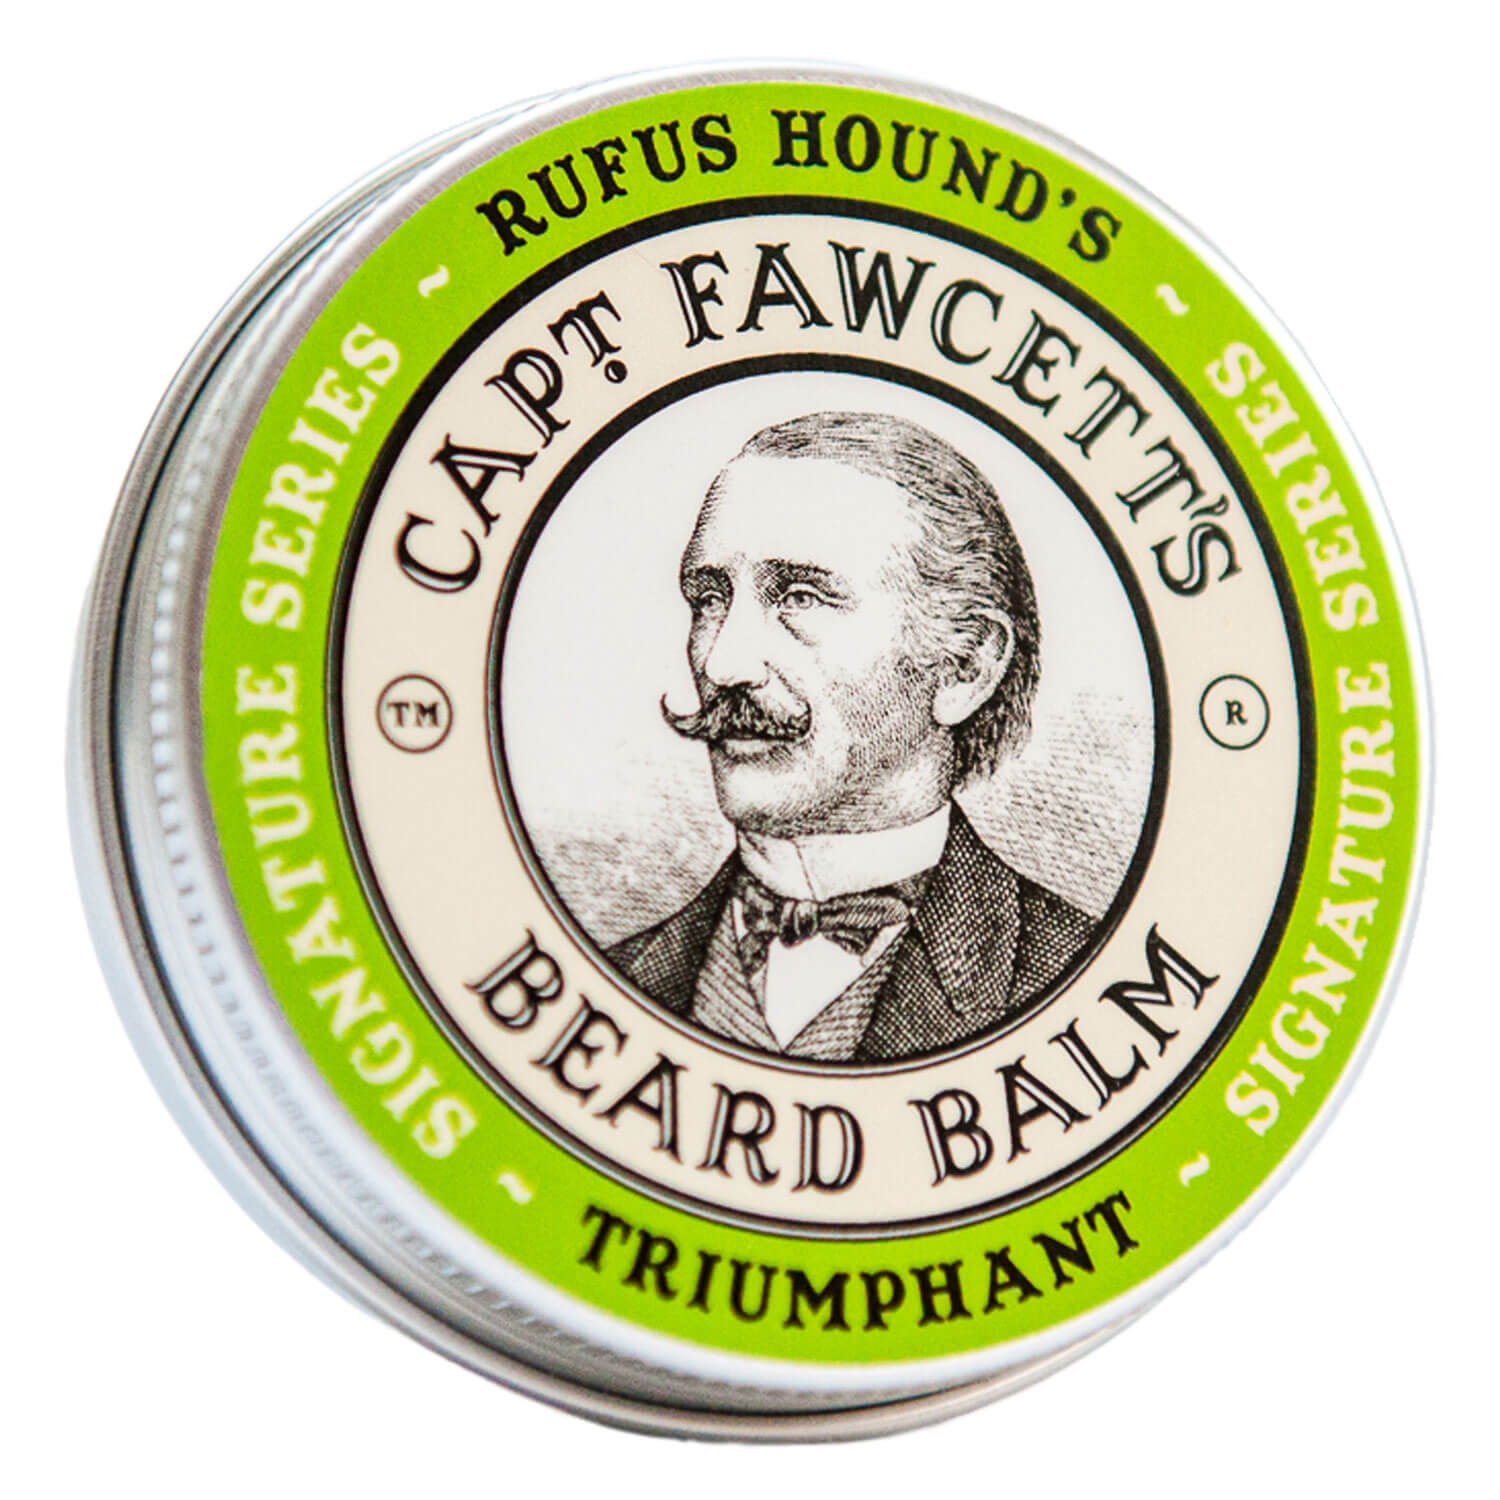 Product image from Capt. Fawcett Care - Triumphant Beard Balm